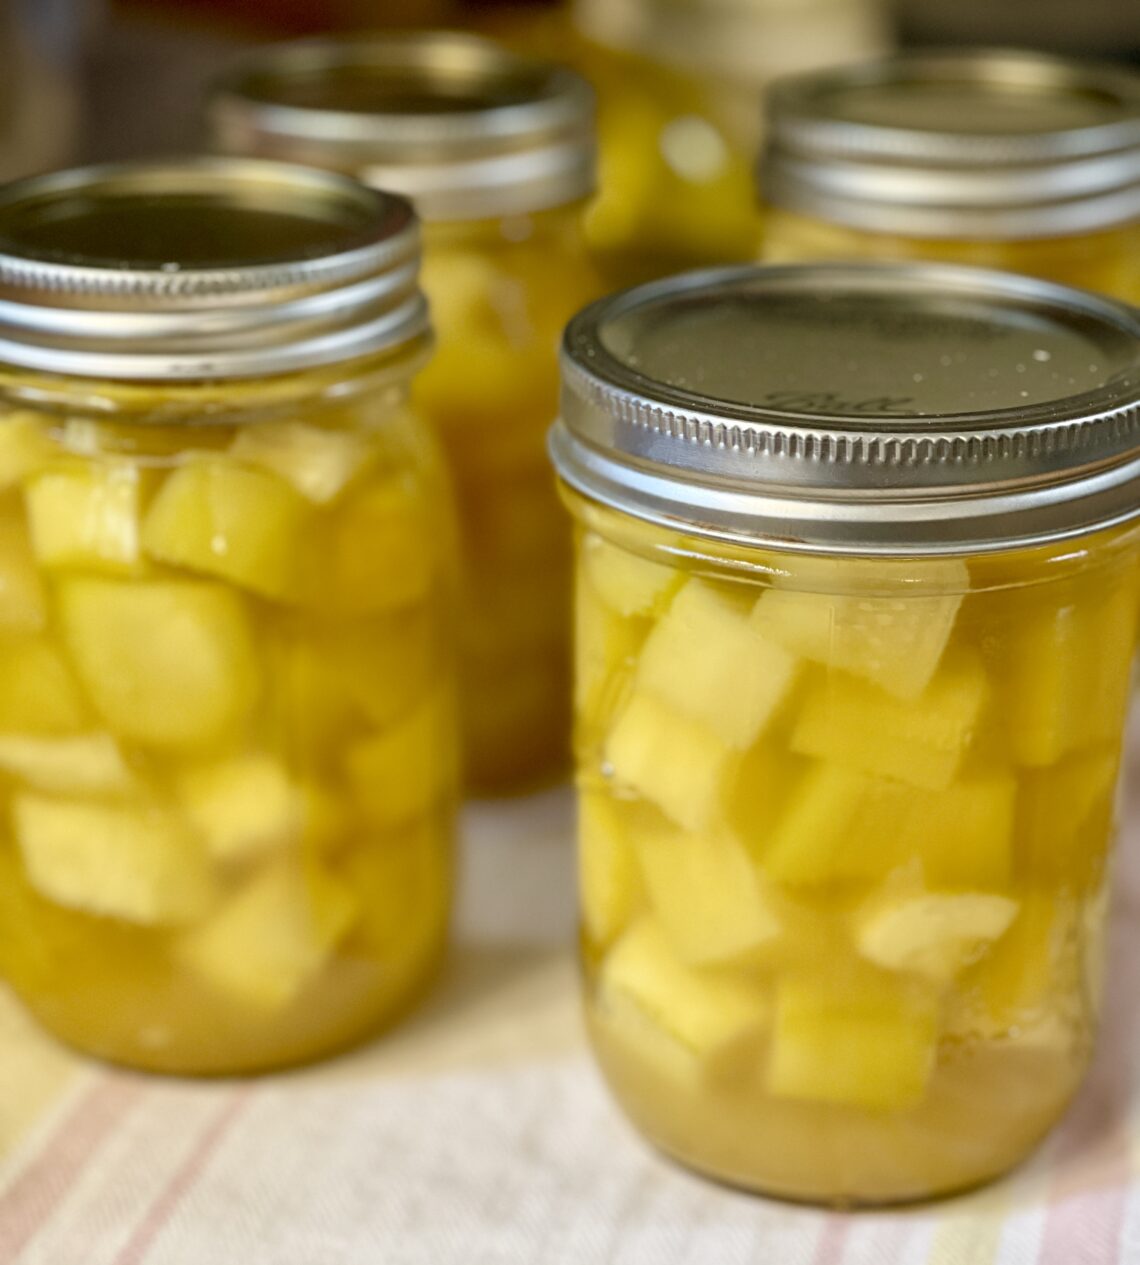 Pineapple zucchini recipe in jars